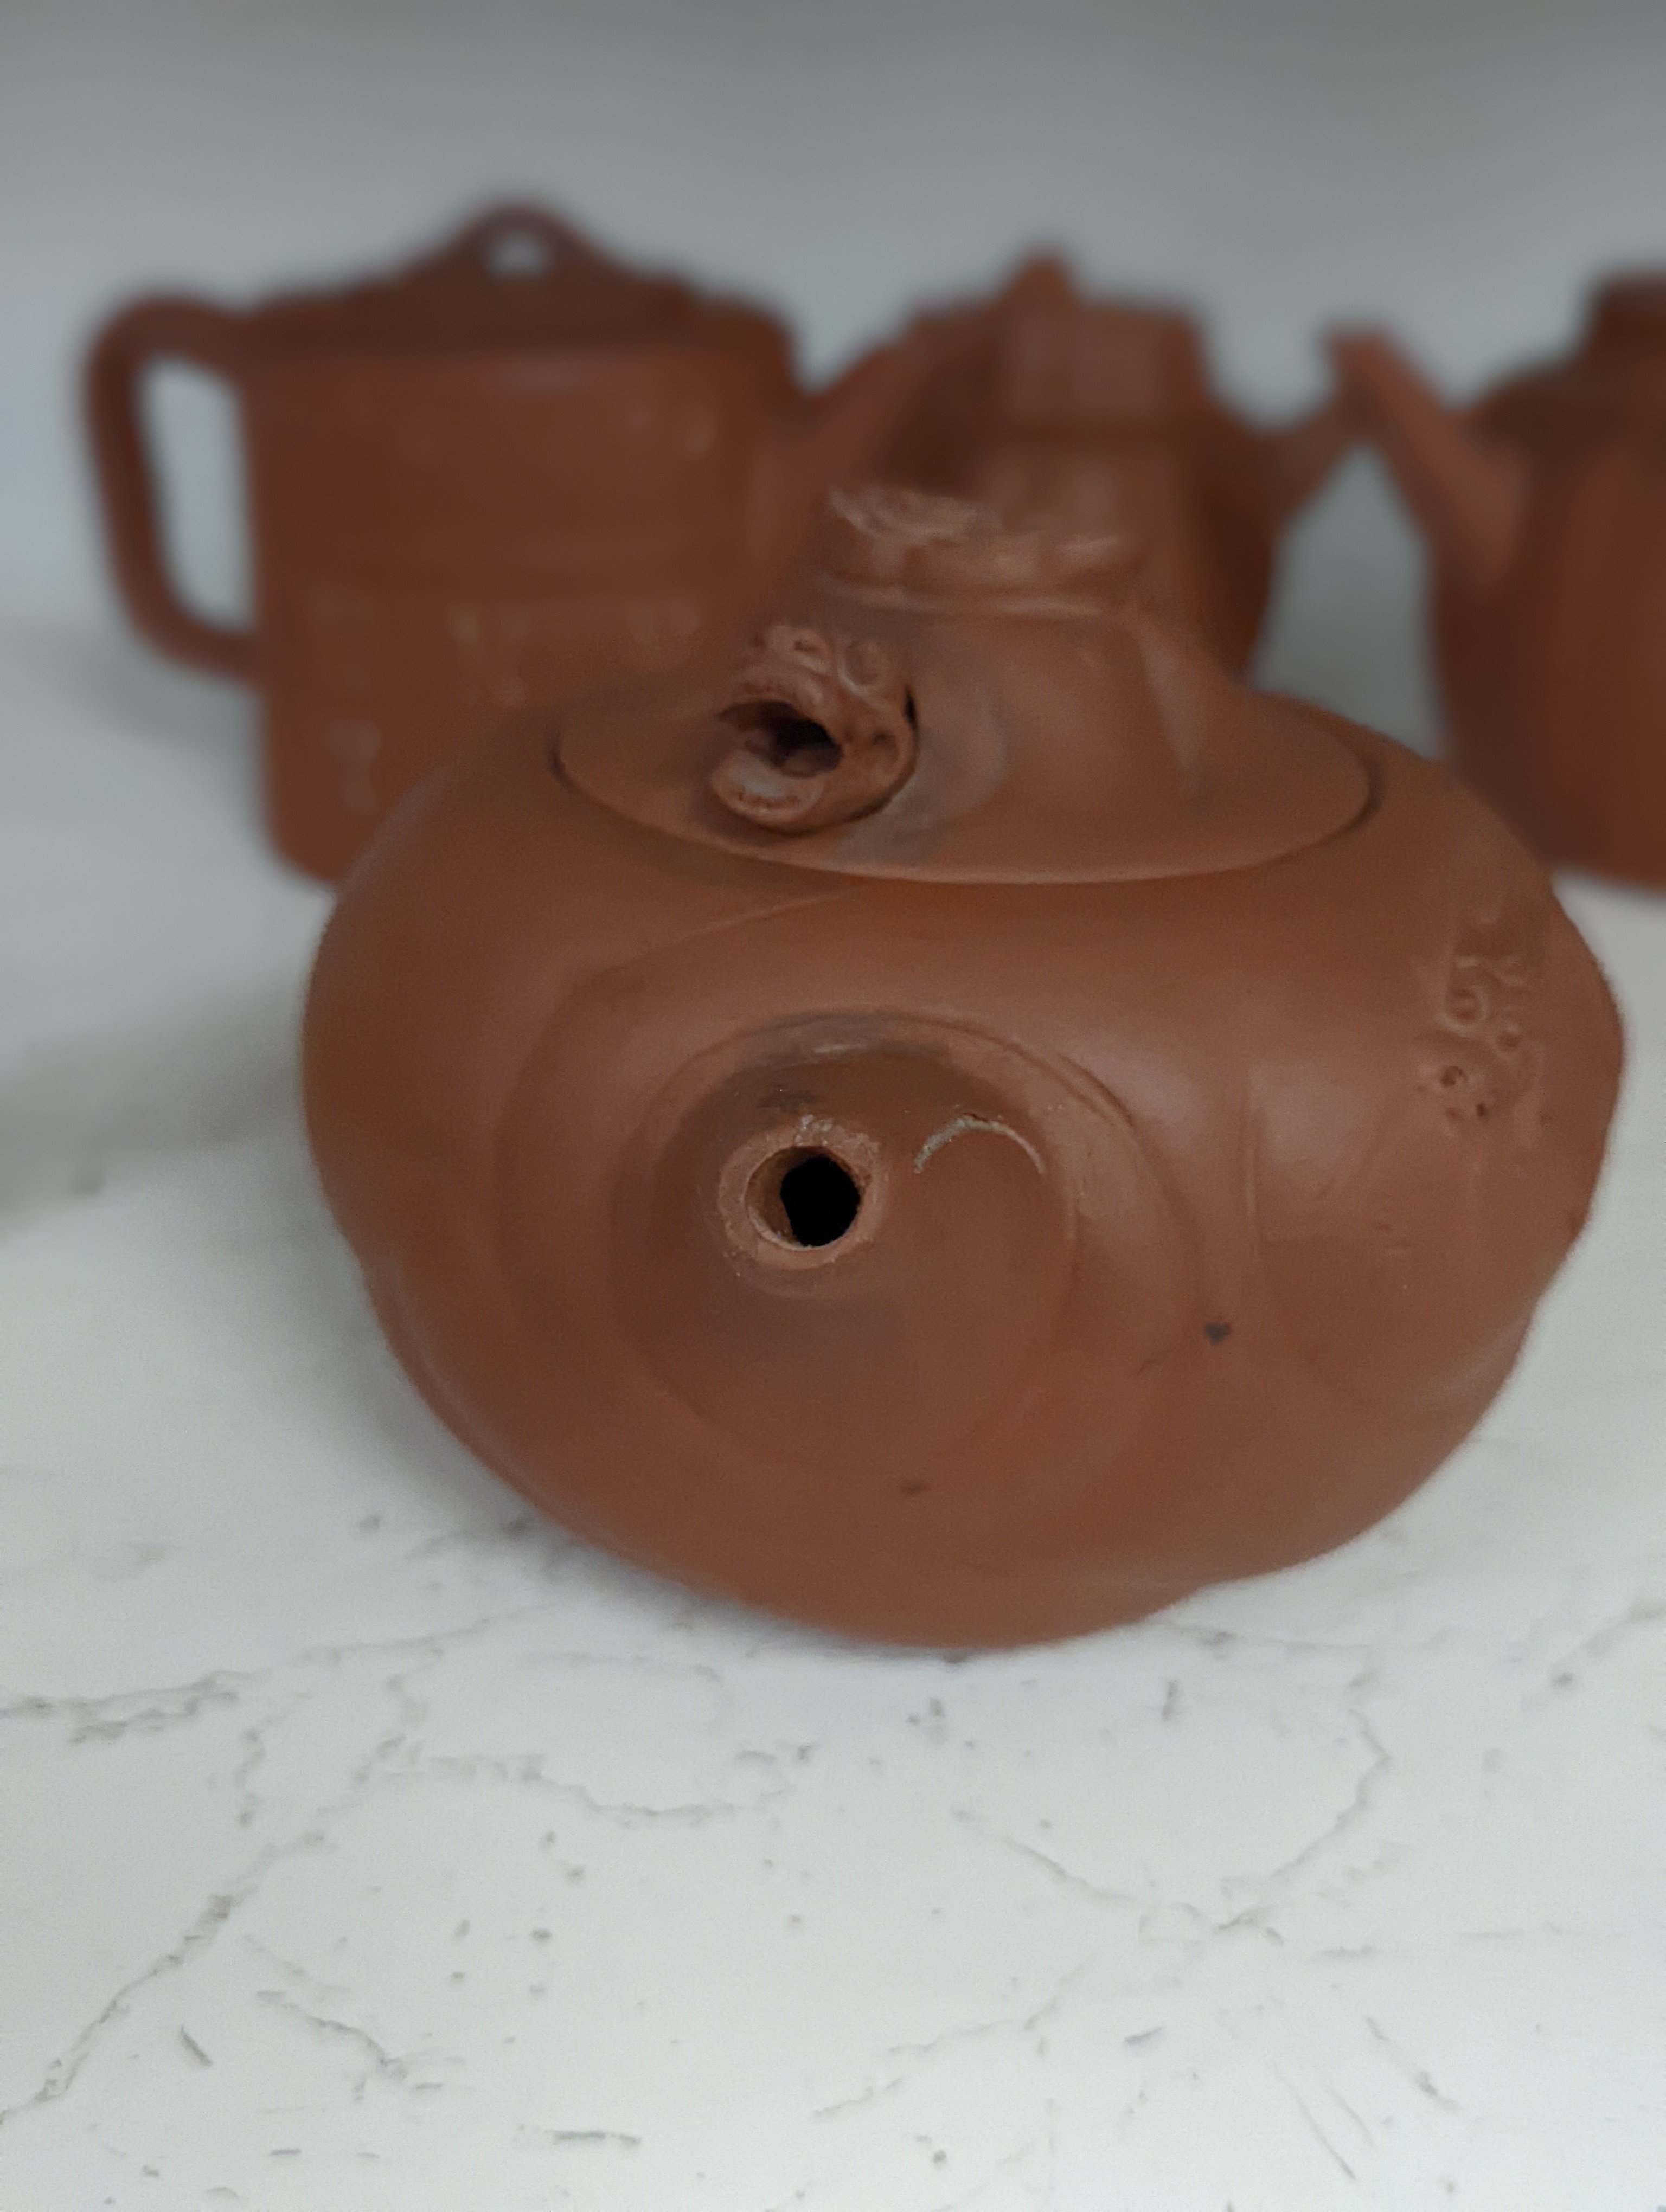 Six Chinese Yixing teapots, tallest 11cm